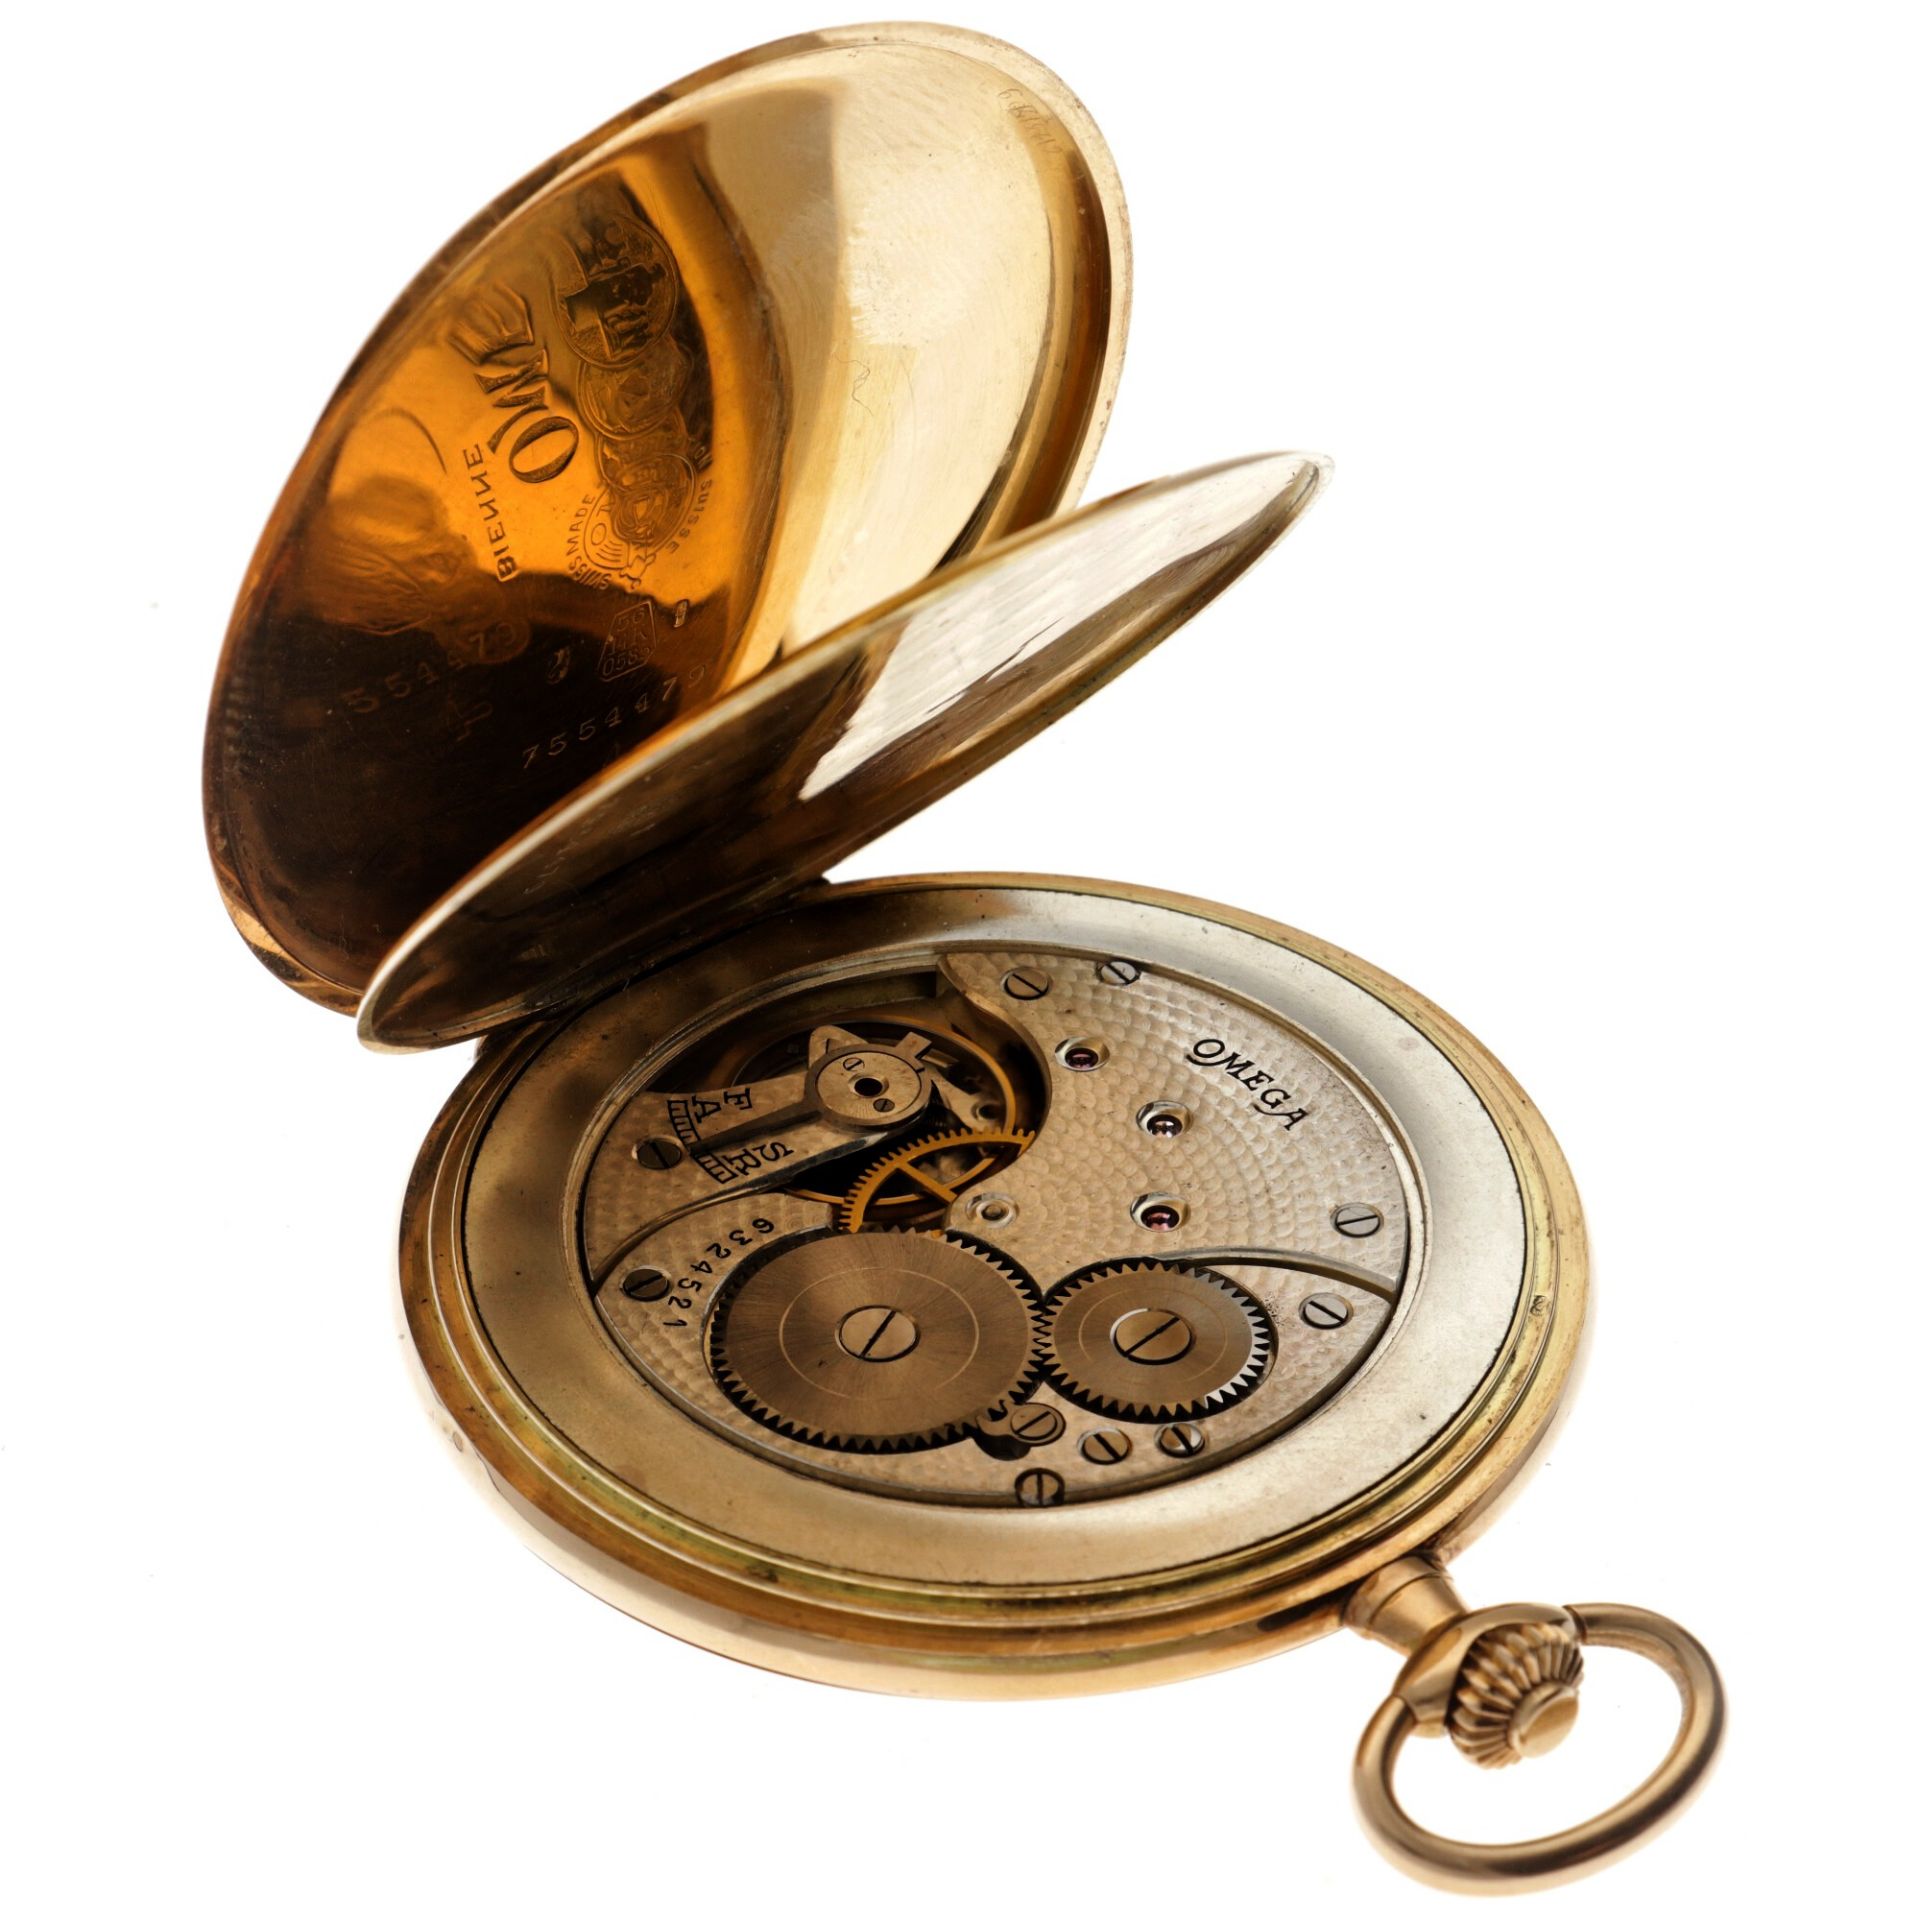 Omega - Men's pocket watch 14K. yellow gold - 1916. - Image 6 of 6